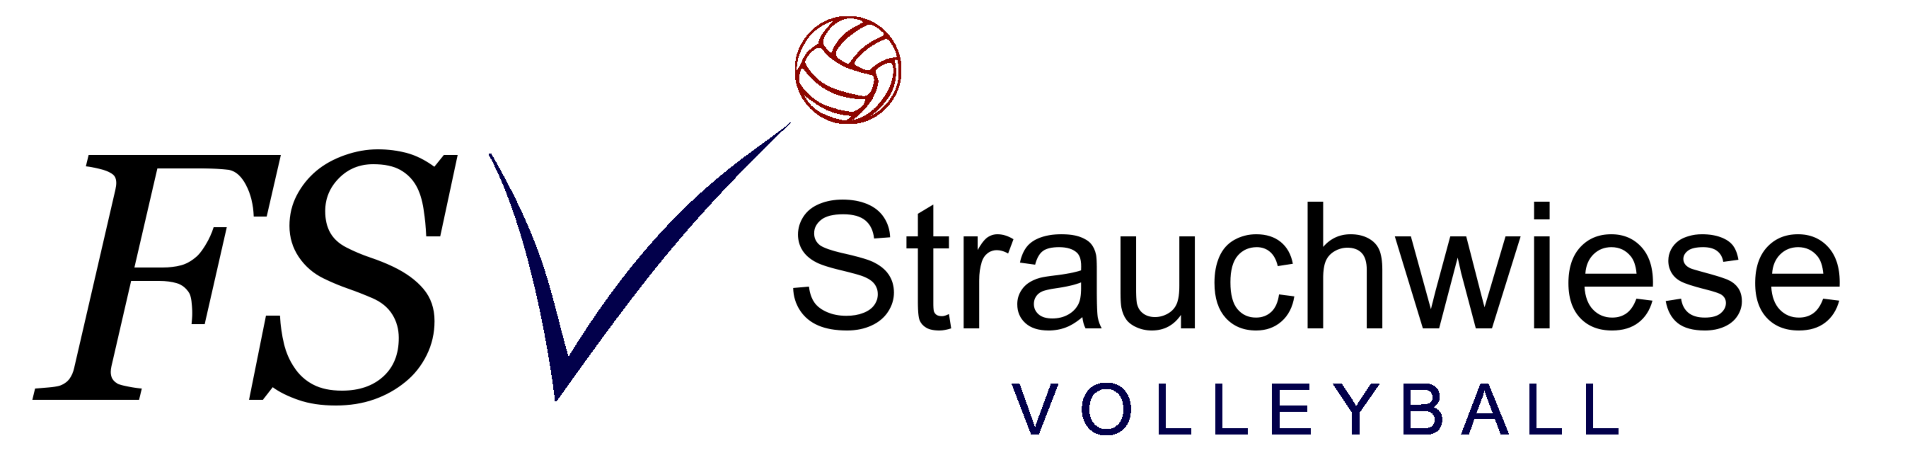 FSV-Strauchwiese-Logo